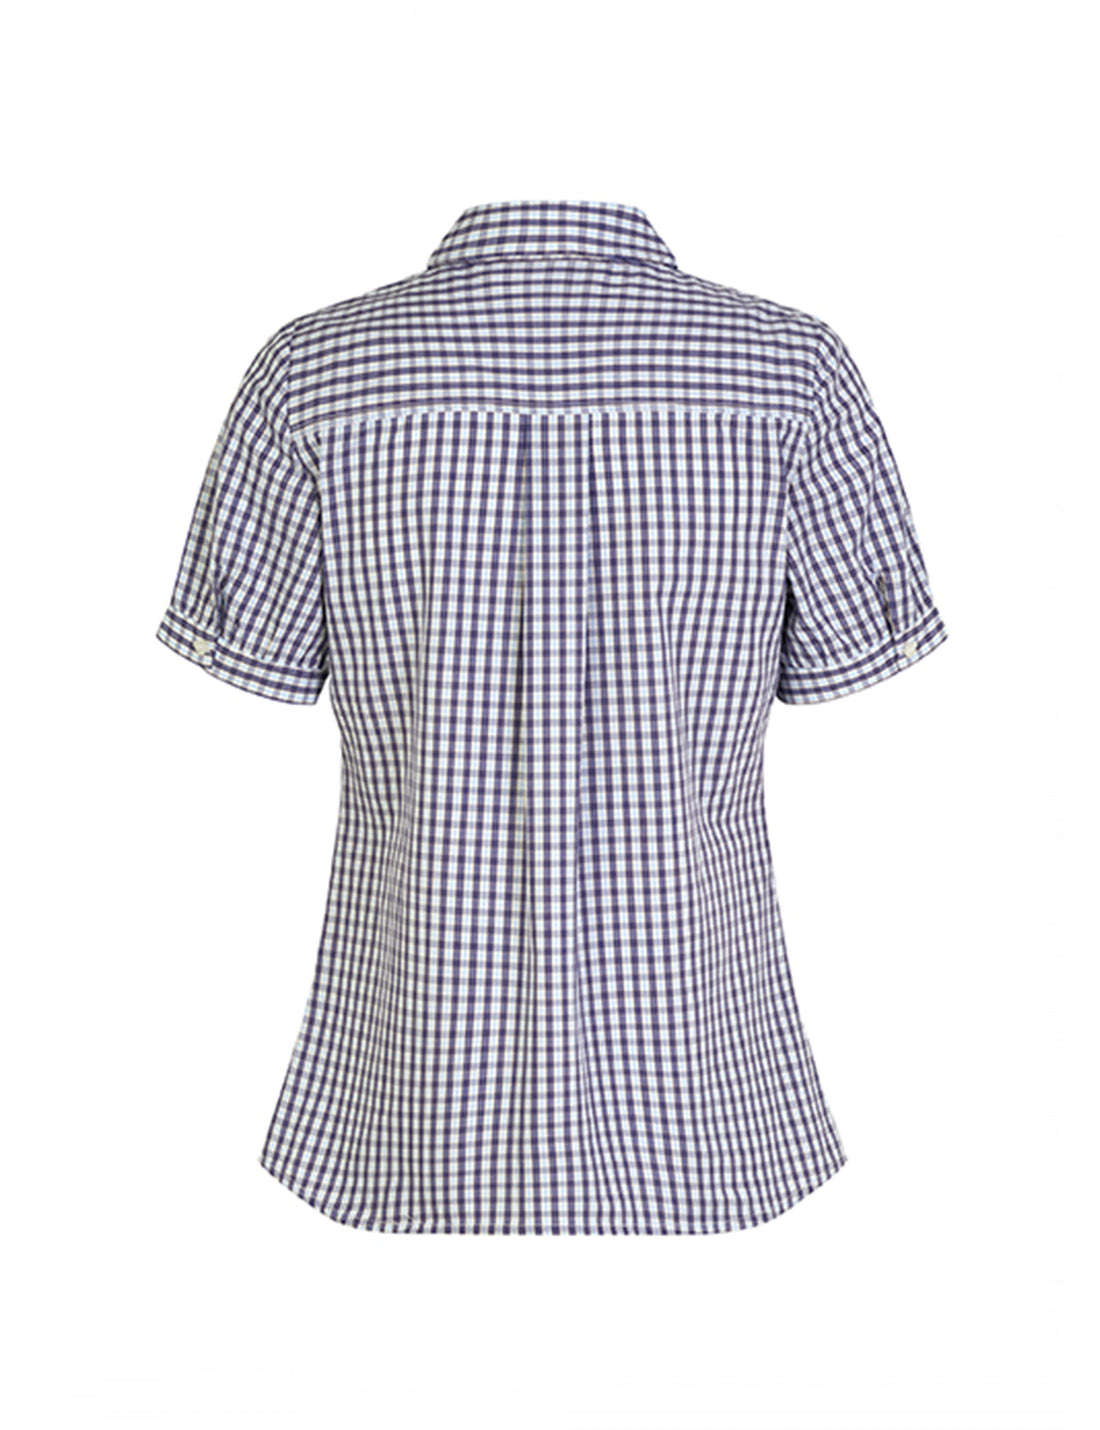 Olivia short sleeve shirt blue/white checks